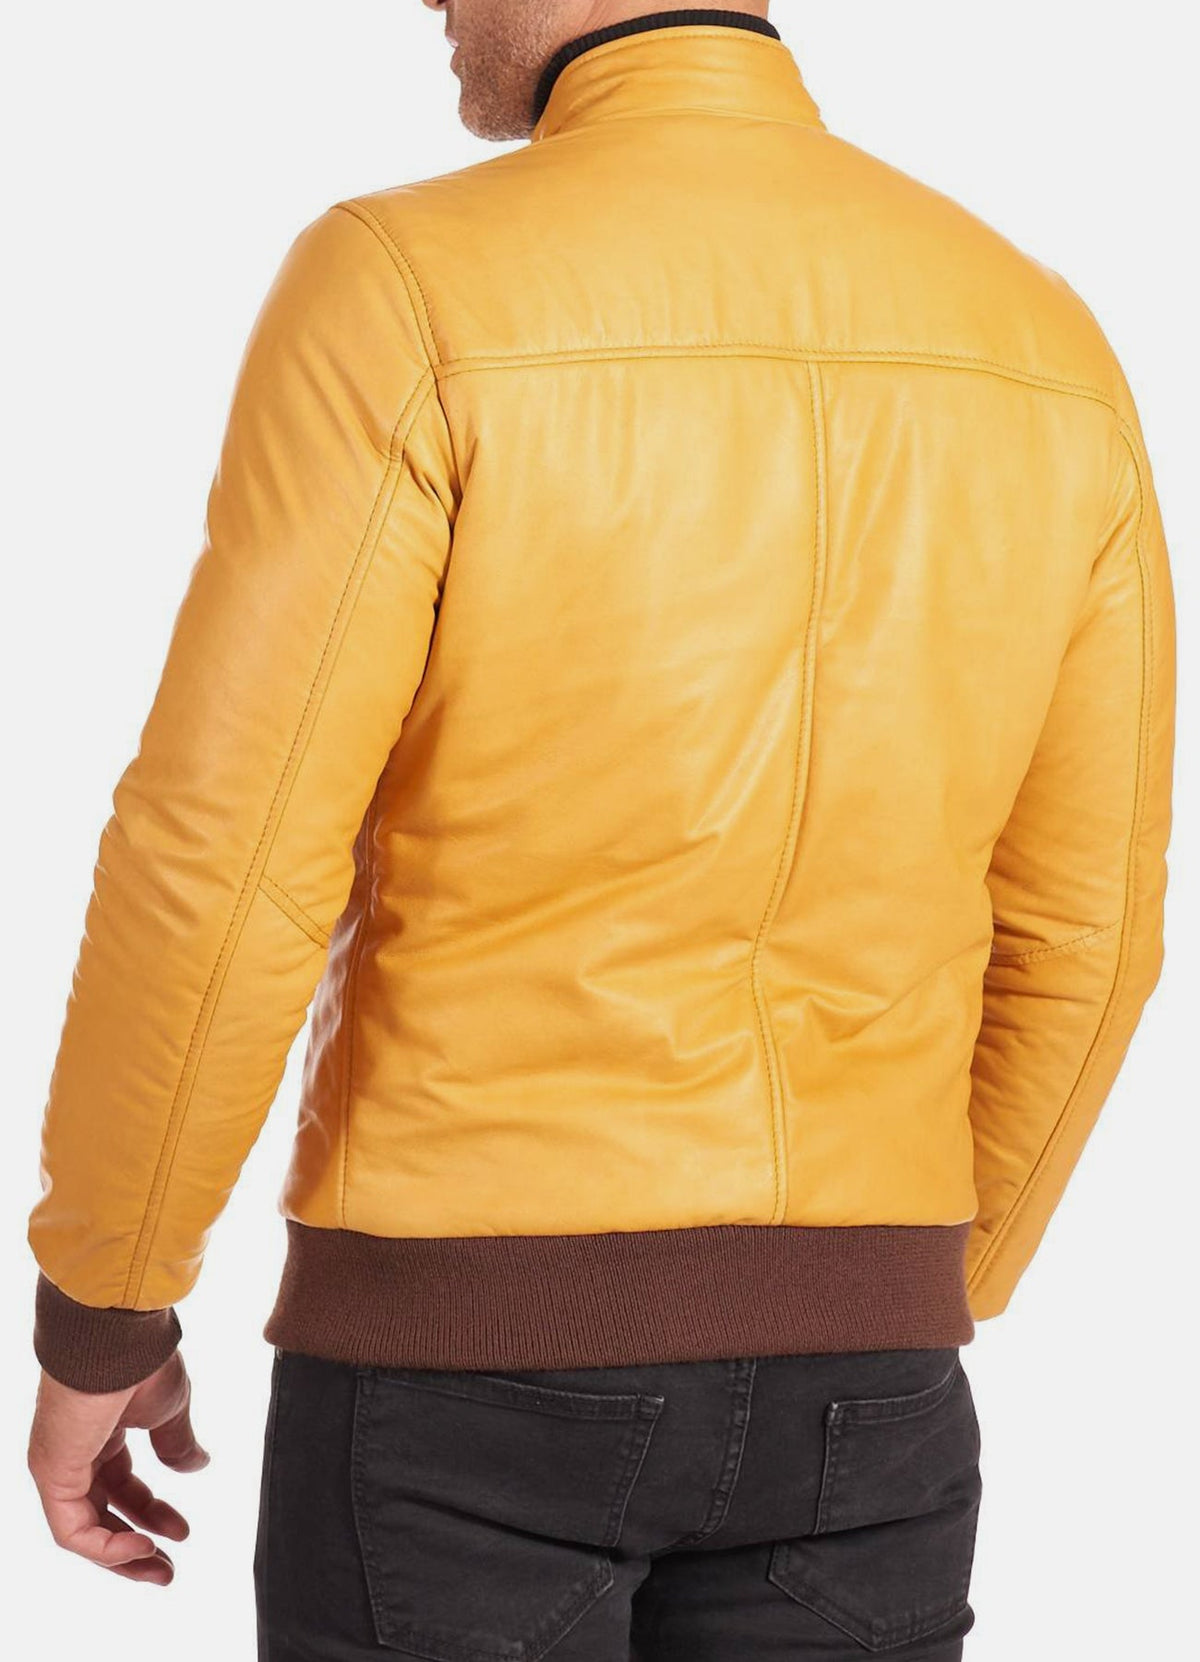 Mens Soft Yellow Bomber Leather Jacket